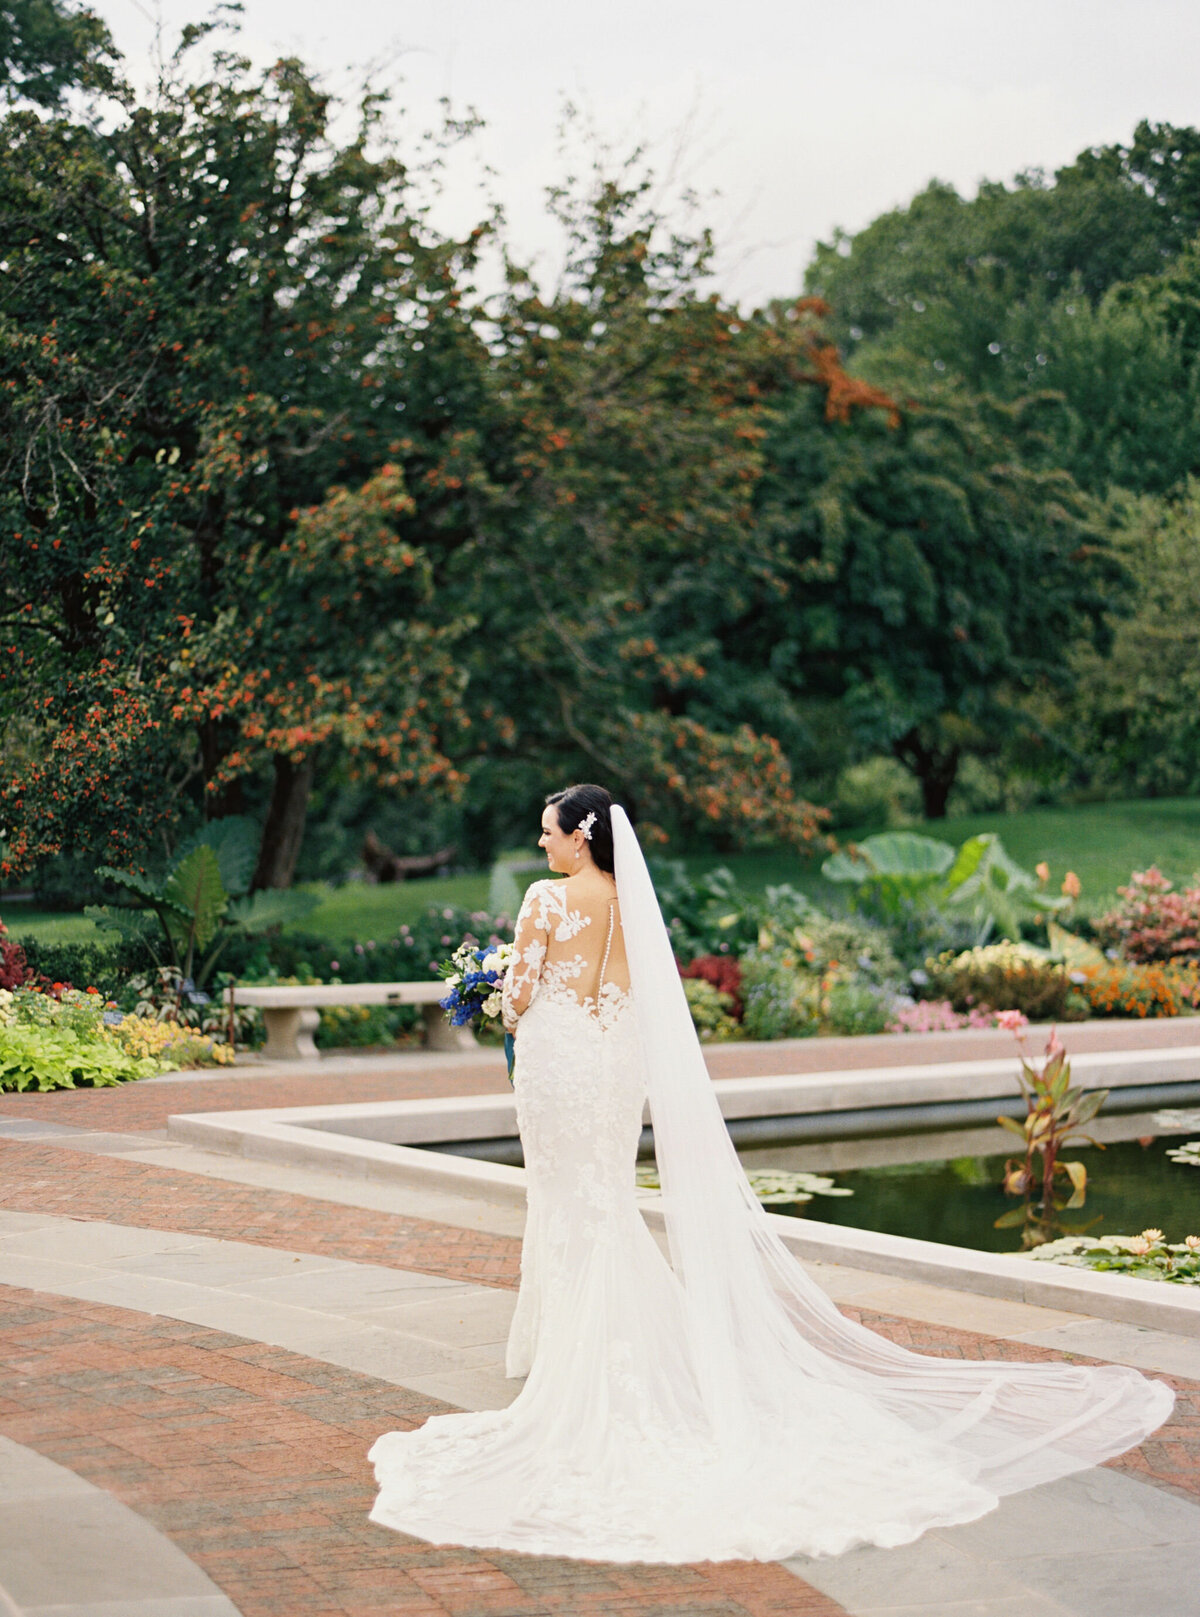 Rachel&Carlos-Fine-Art-Film-Wedding-Photographer-Brooklyn-Botanical-Garden-11